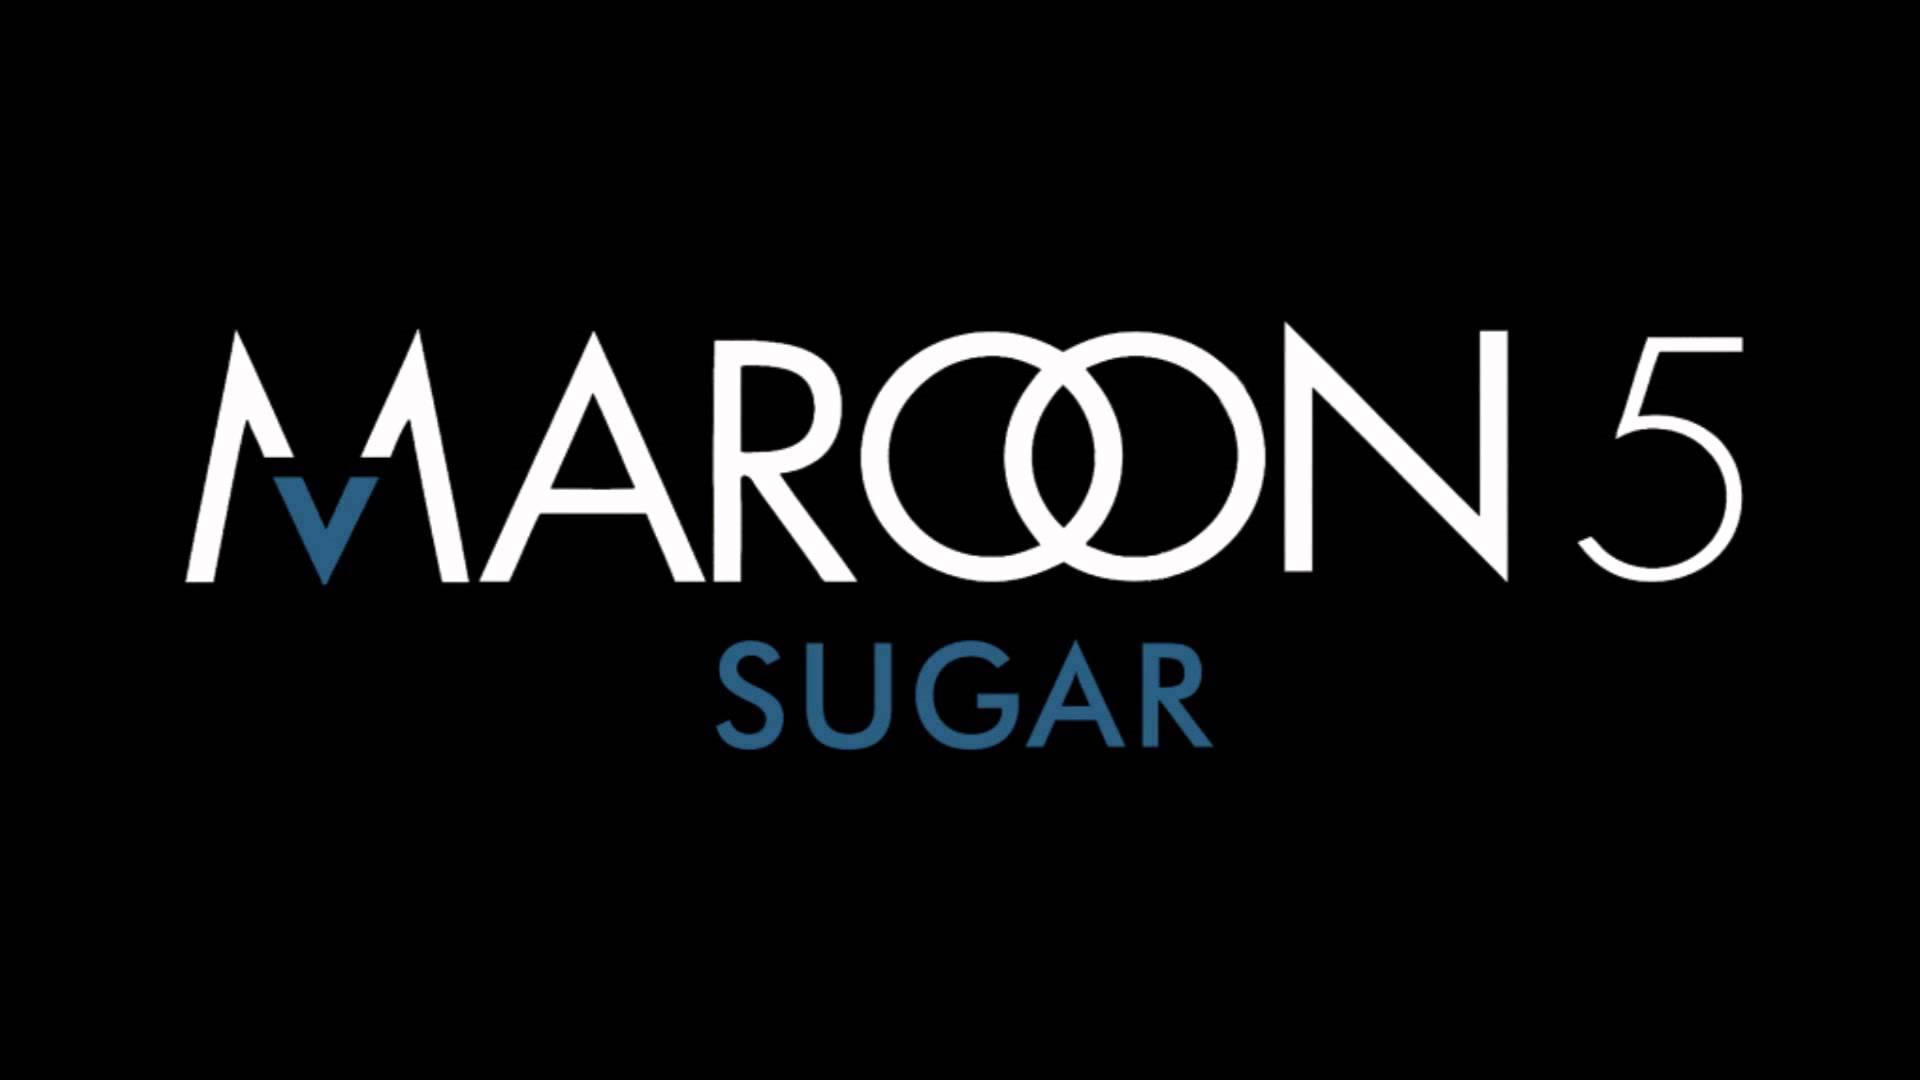 Maroon 5 Sugar Black Background Wallpaper